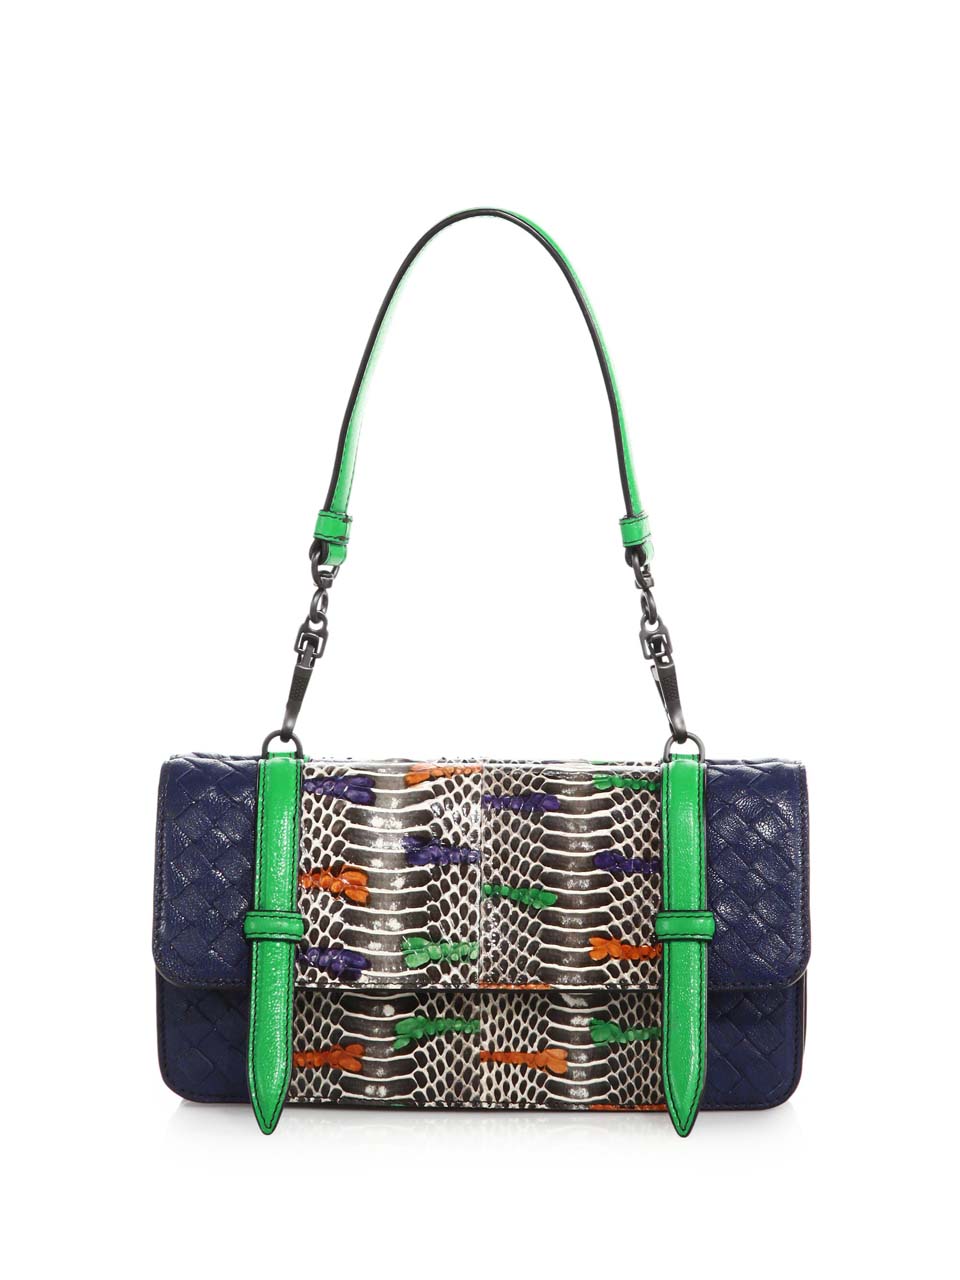 Bottega Veneta Multicolor Intrecciato Leather & Snakeskin Top-Handle Bag